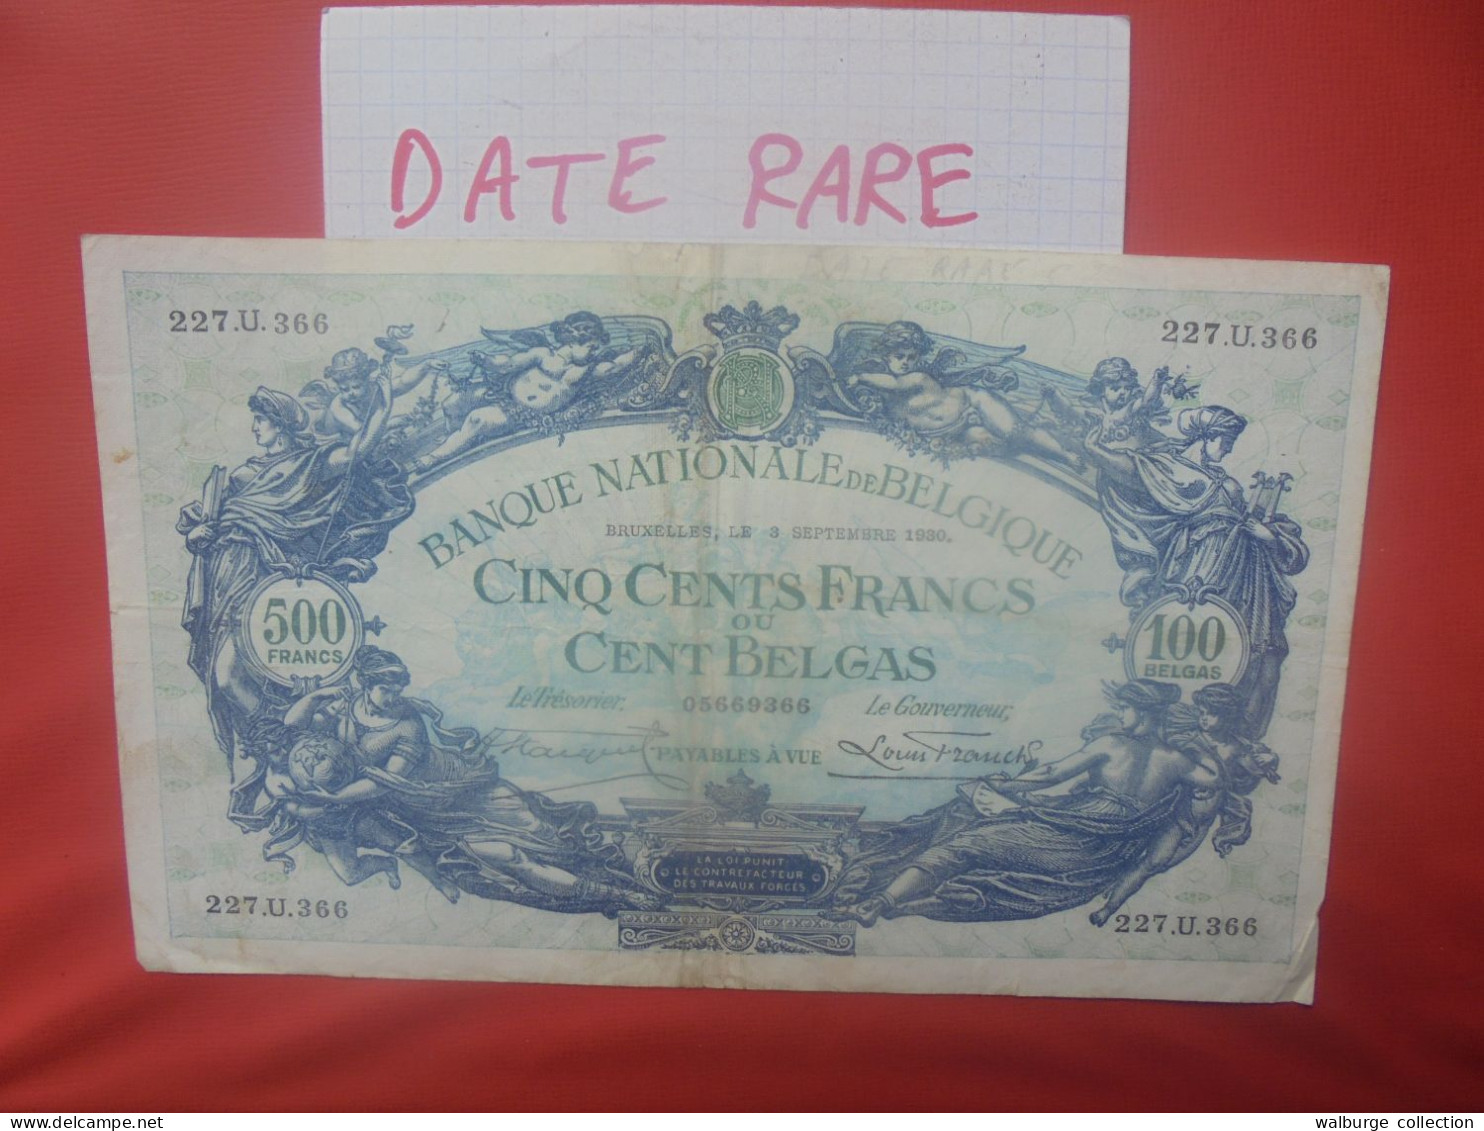 BELGIQUE 500 Francs 1930 (Date+Rare) Circuler (B.18) - 500 Frank-100 Belgas